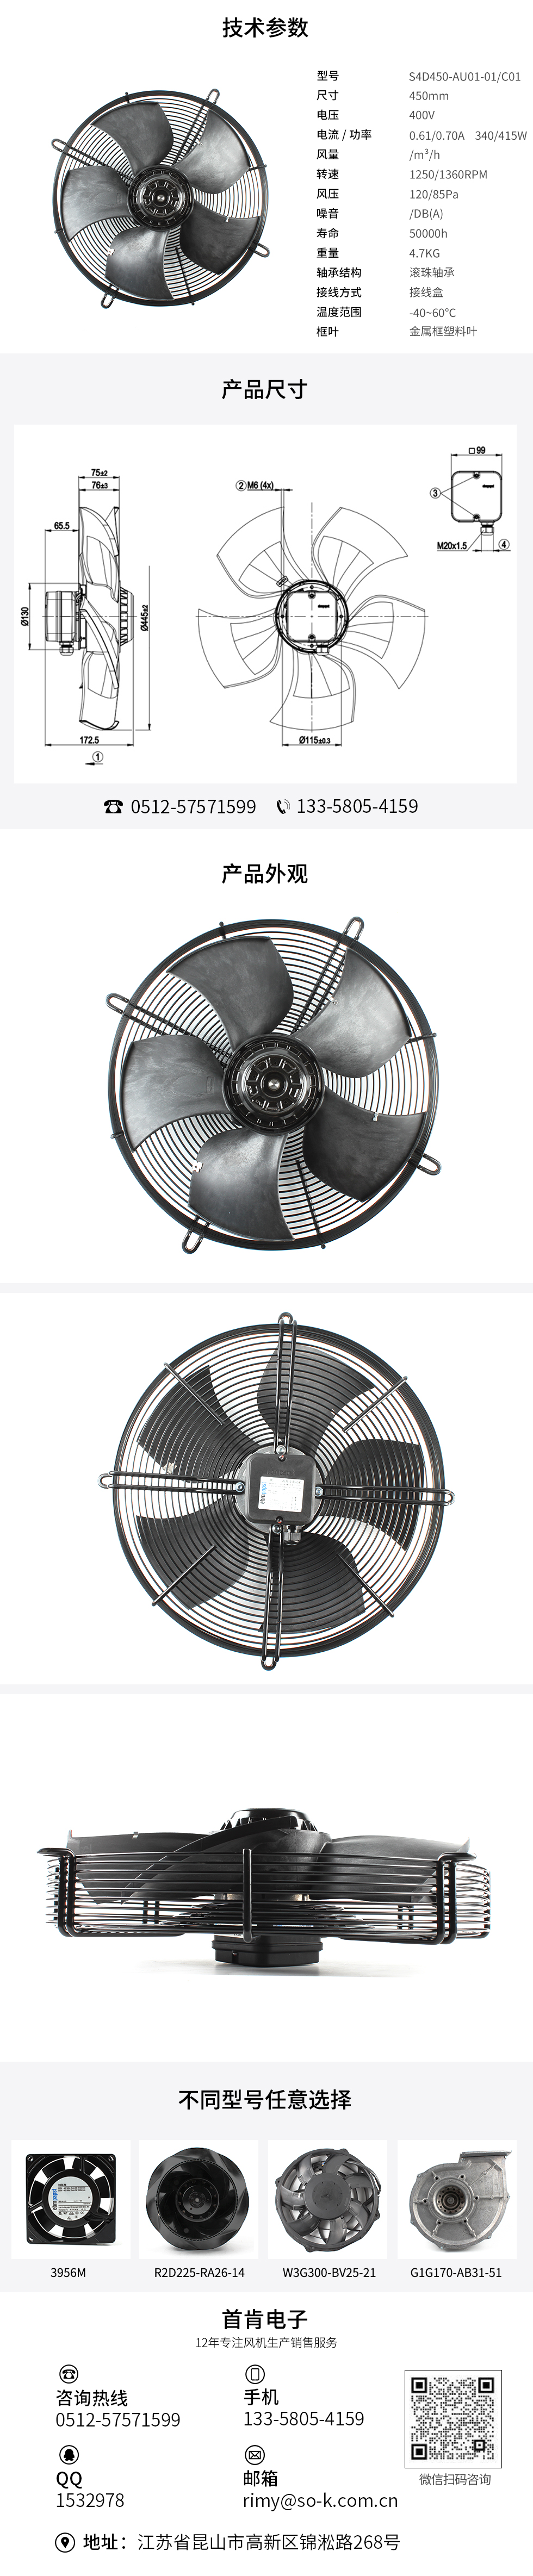 Ac静音风扇,ac散热风扇厂家,工业散热风扇品牌,S4D450-AU01-01/C01